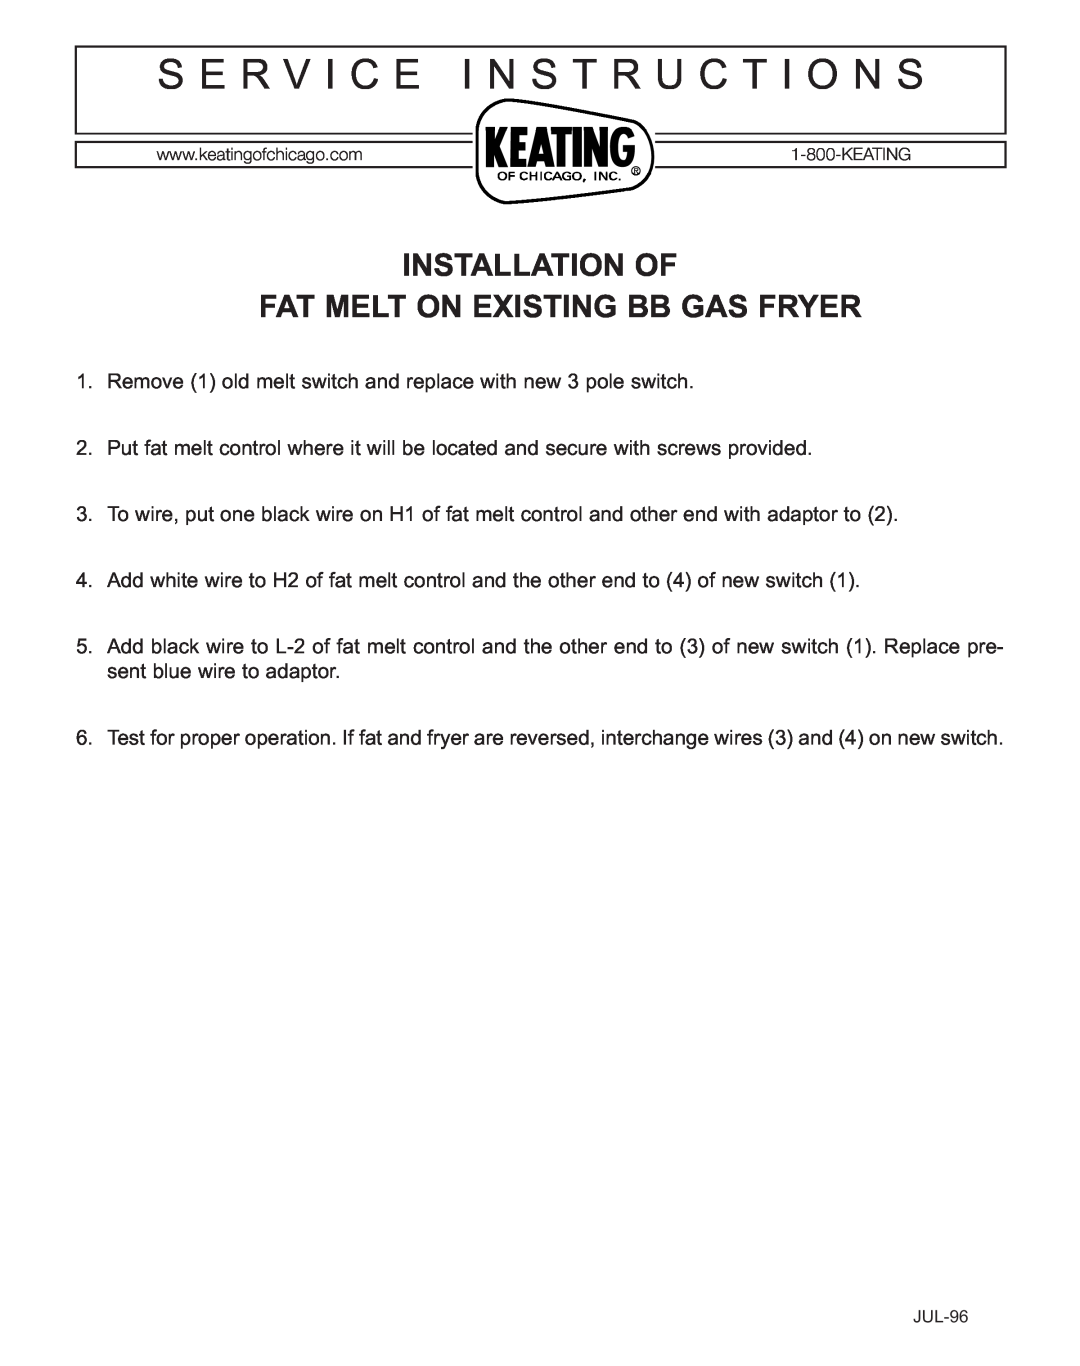 Keating Of Chicago BB Gas Fryer manual S E R V I C E I N S T R U C T I O N S 